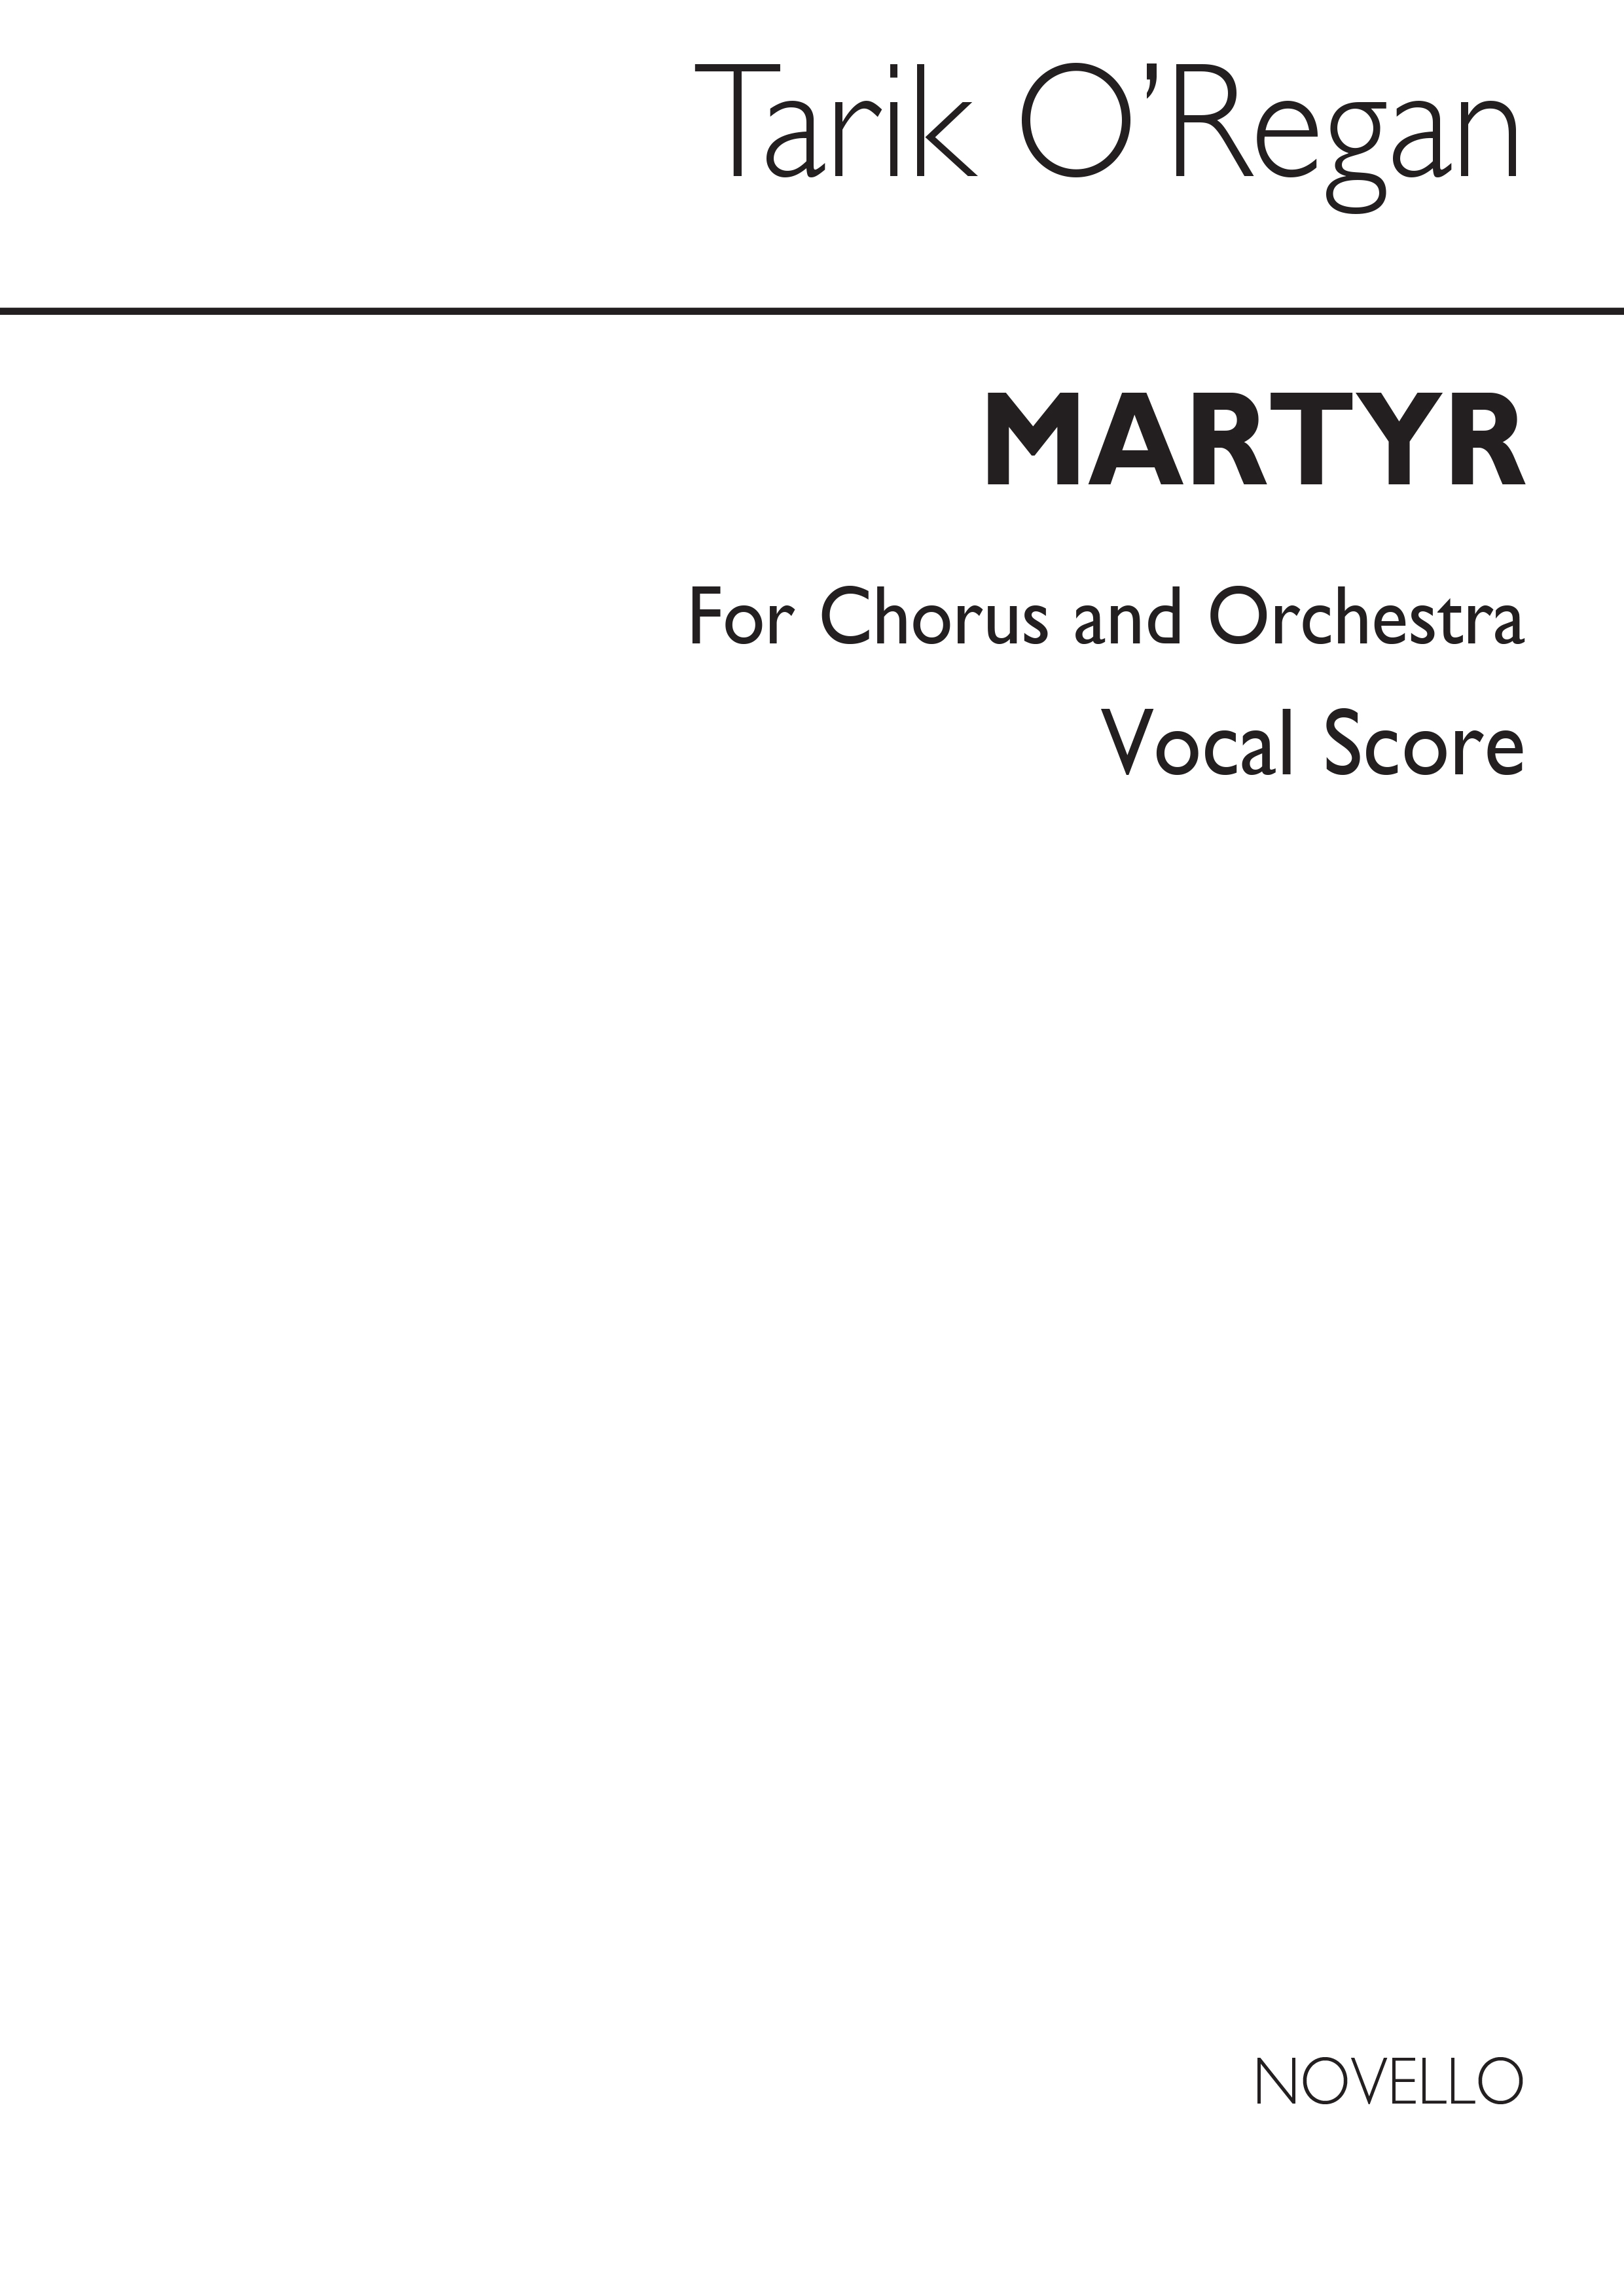 Tarik O'Regan: Martyr (Vocal Score)